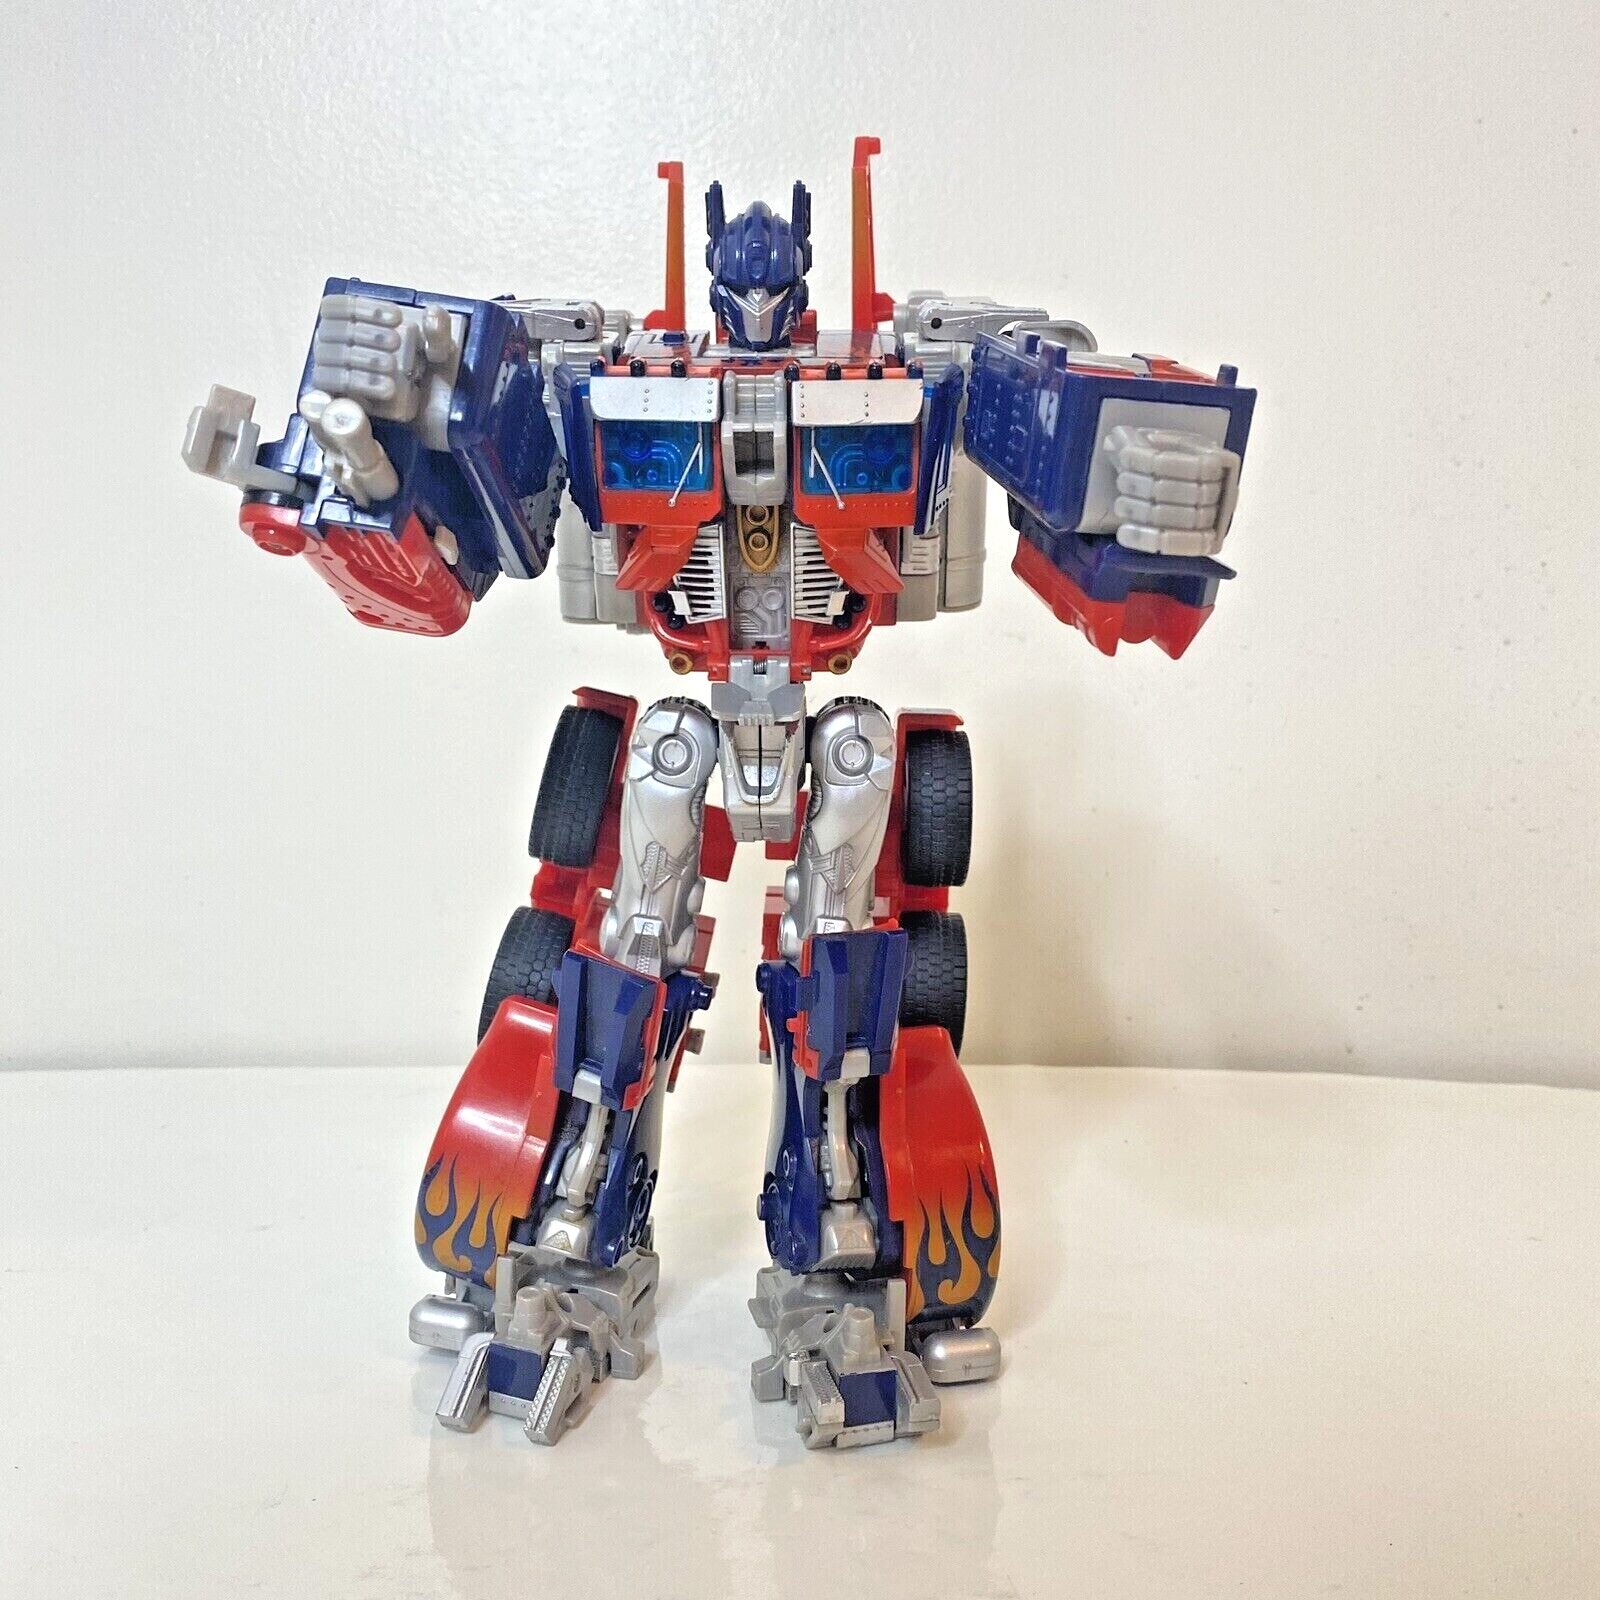 Hasbro Transformers Optimus Prime Leader Class 2006 11” Figure WORKS Incomplete